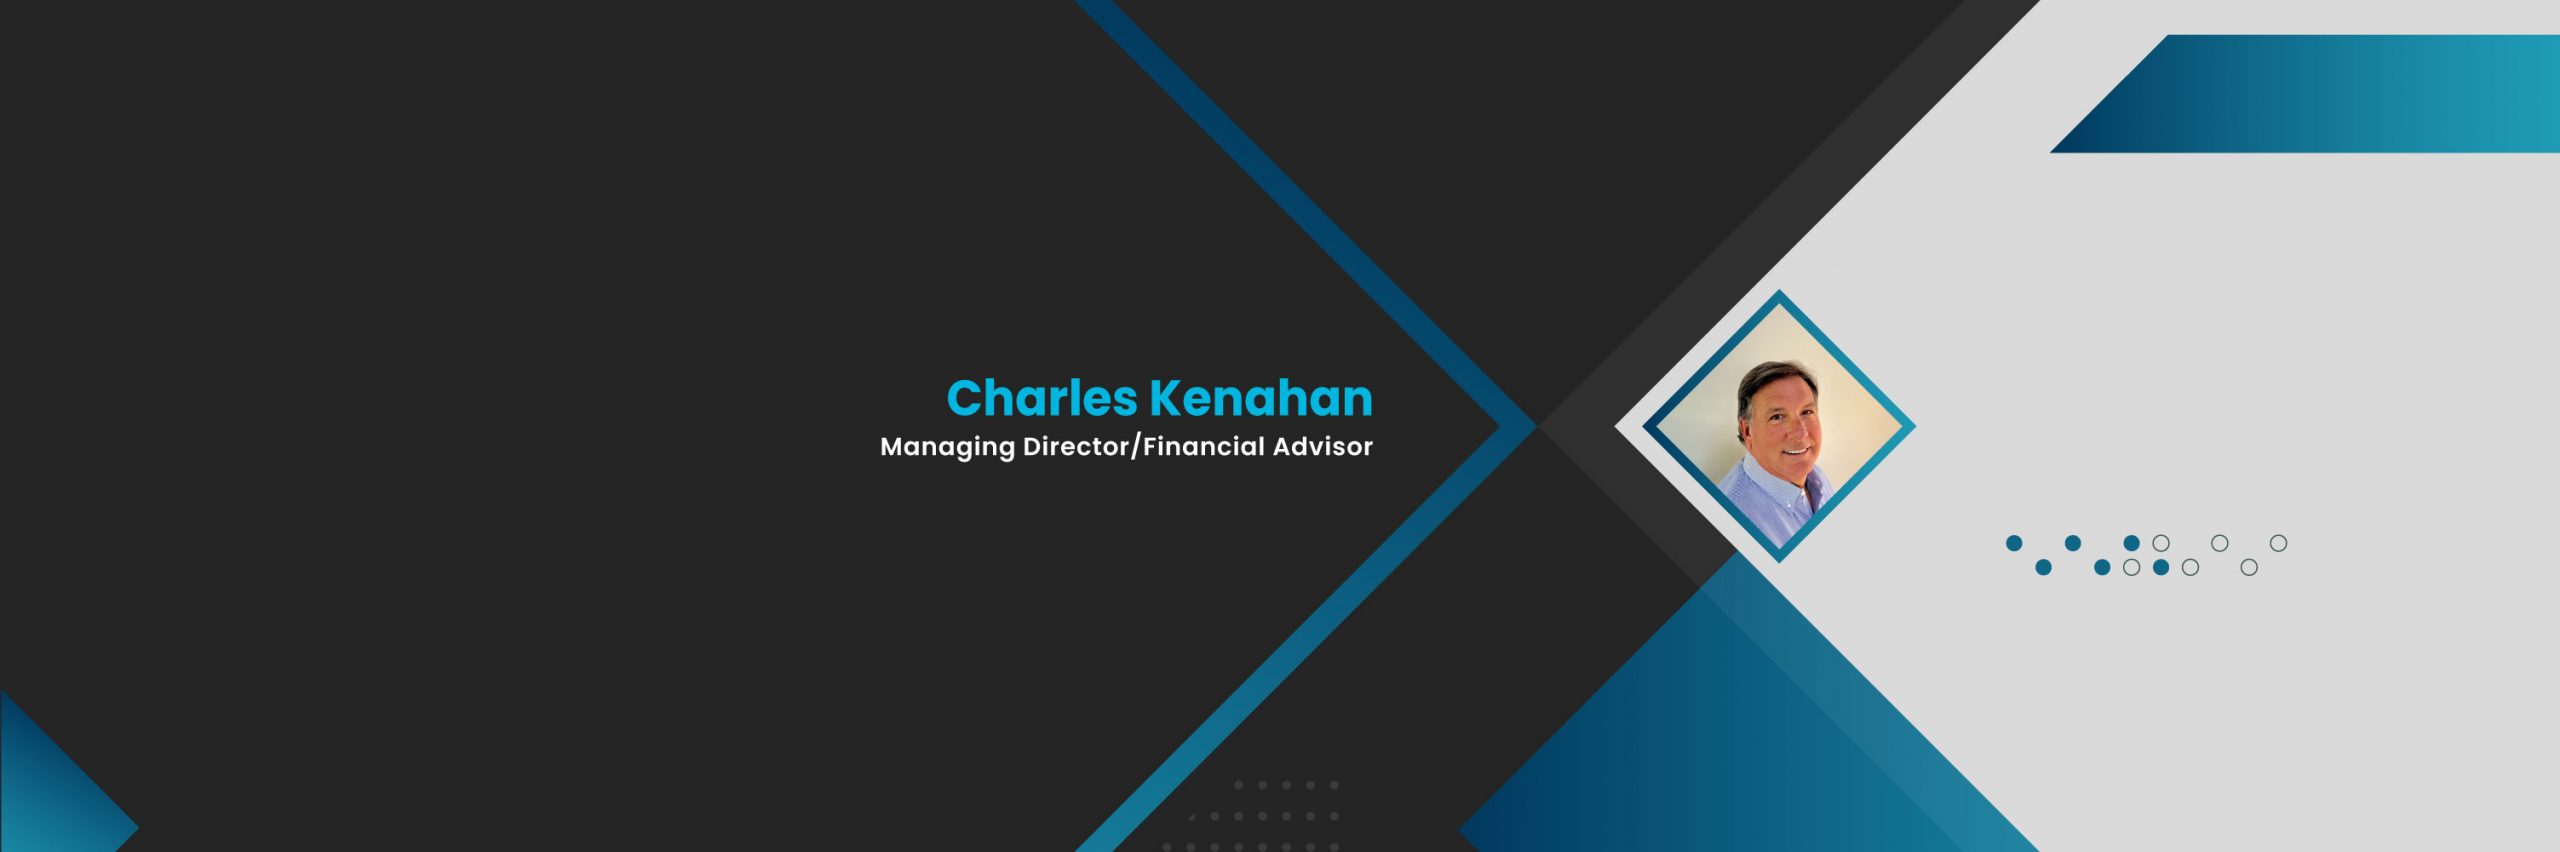 Charles Kenahan |Managing Director/Financial Advisor| Newport, Rhode Island